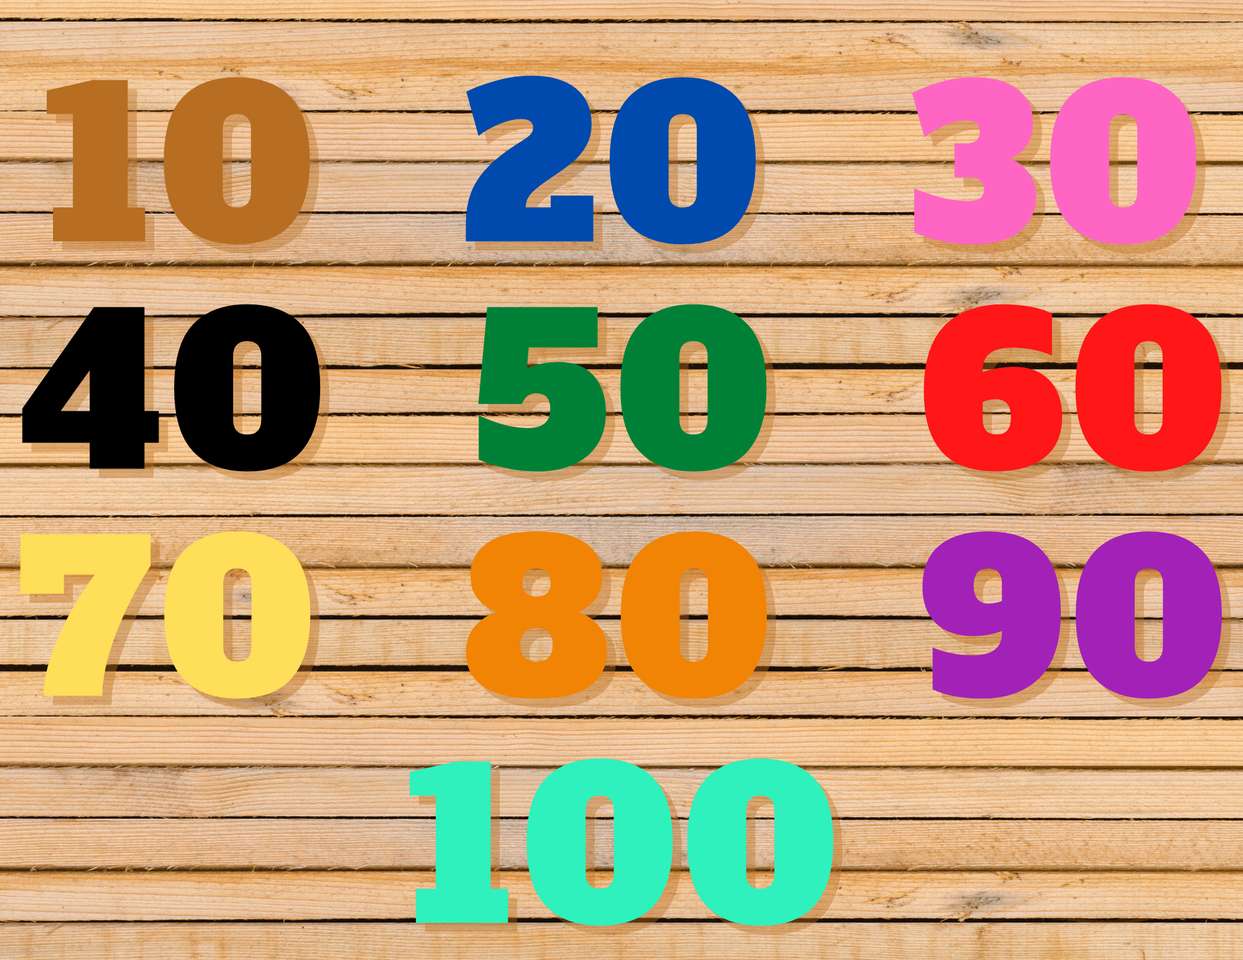 contar por 10s puzzle online a partir de fotografia